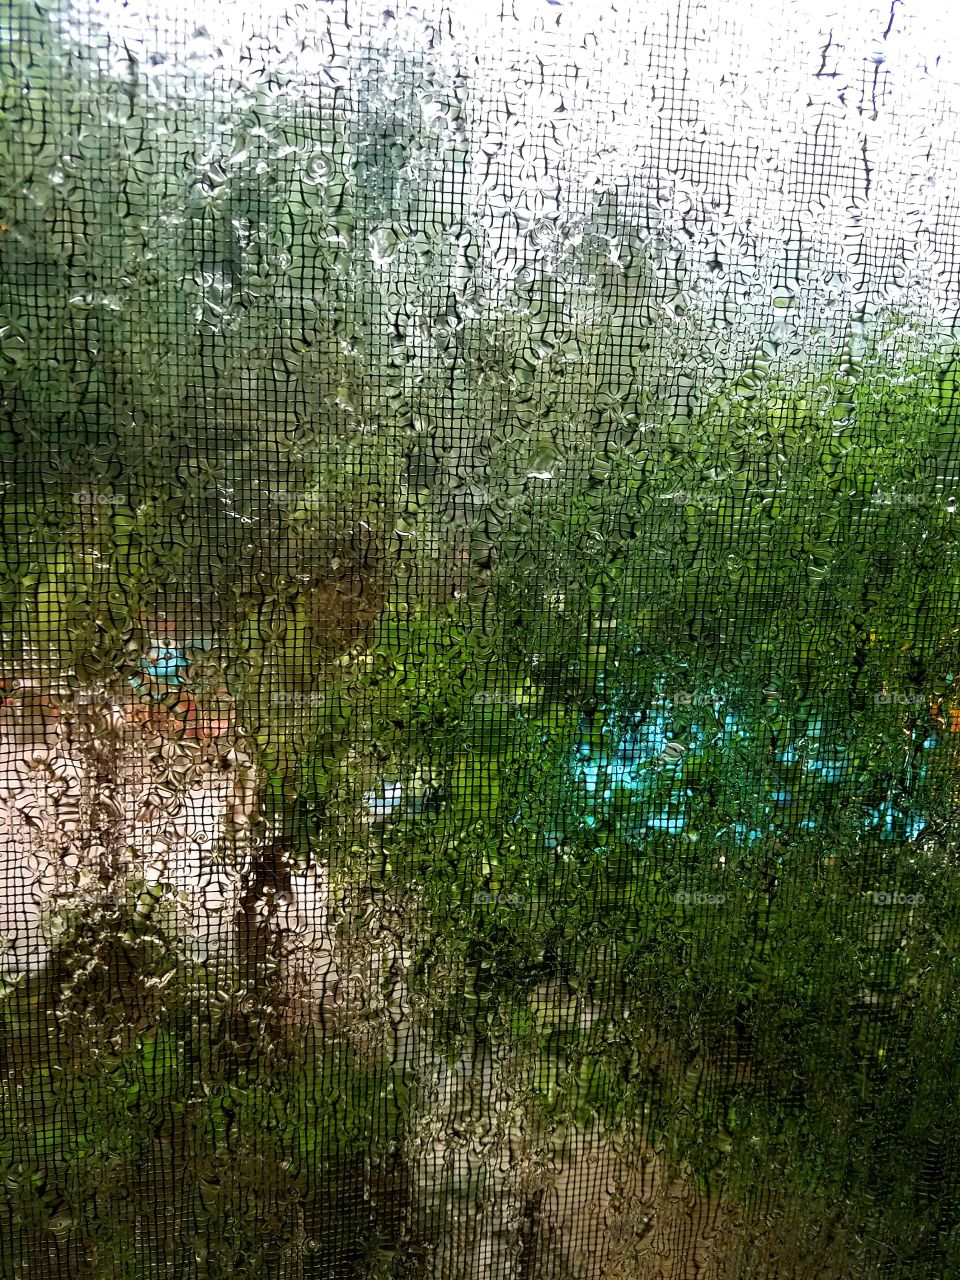 Rain through the window screen